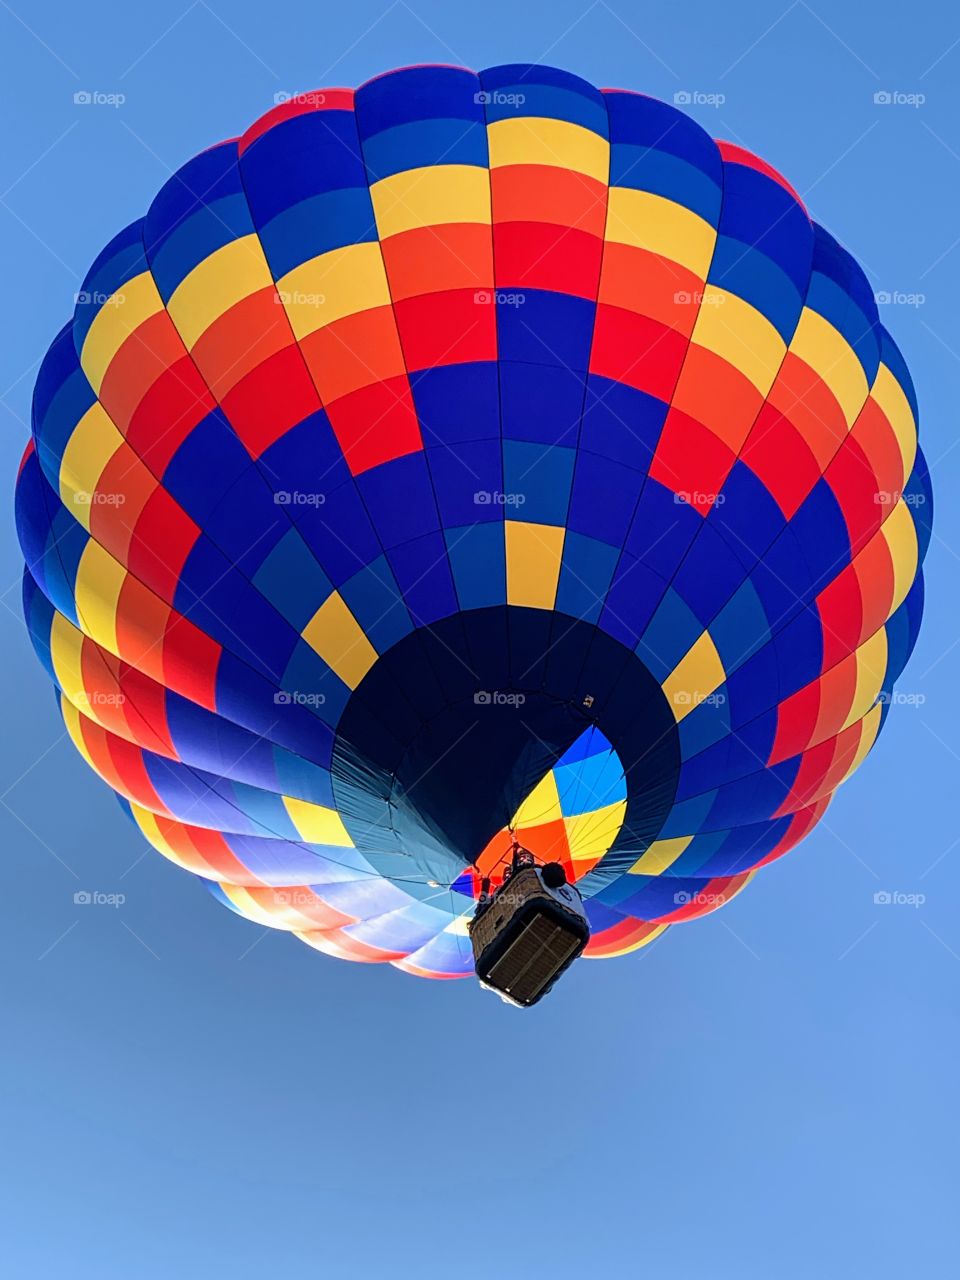 Colorful Hot Air Balloon 